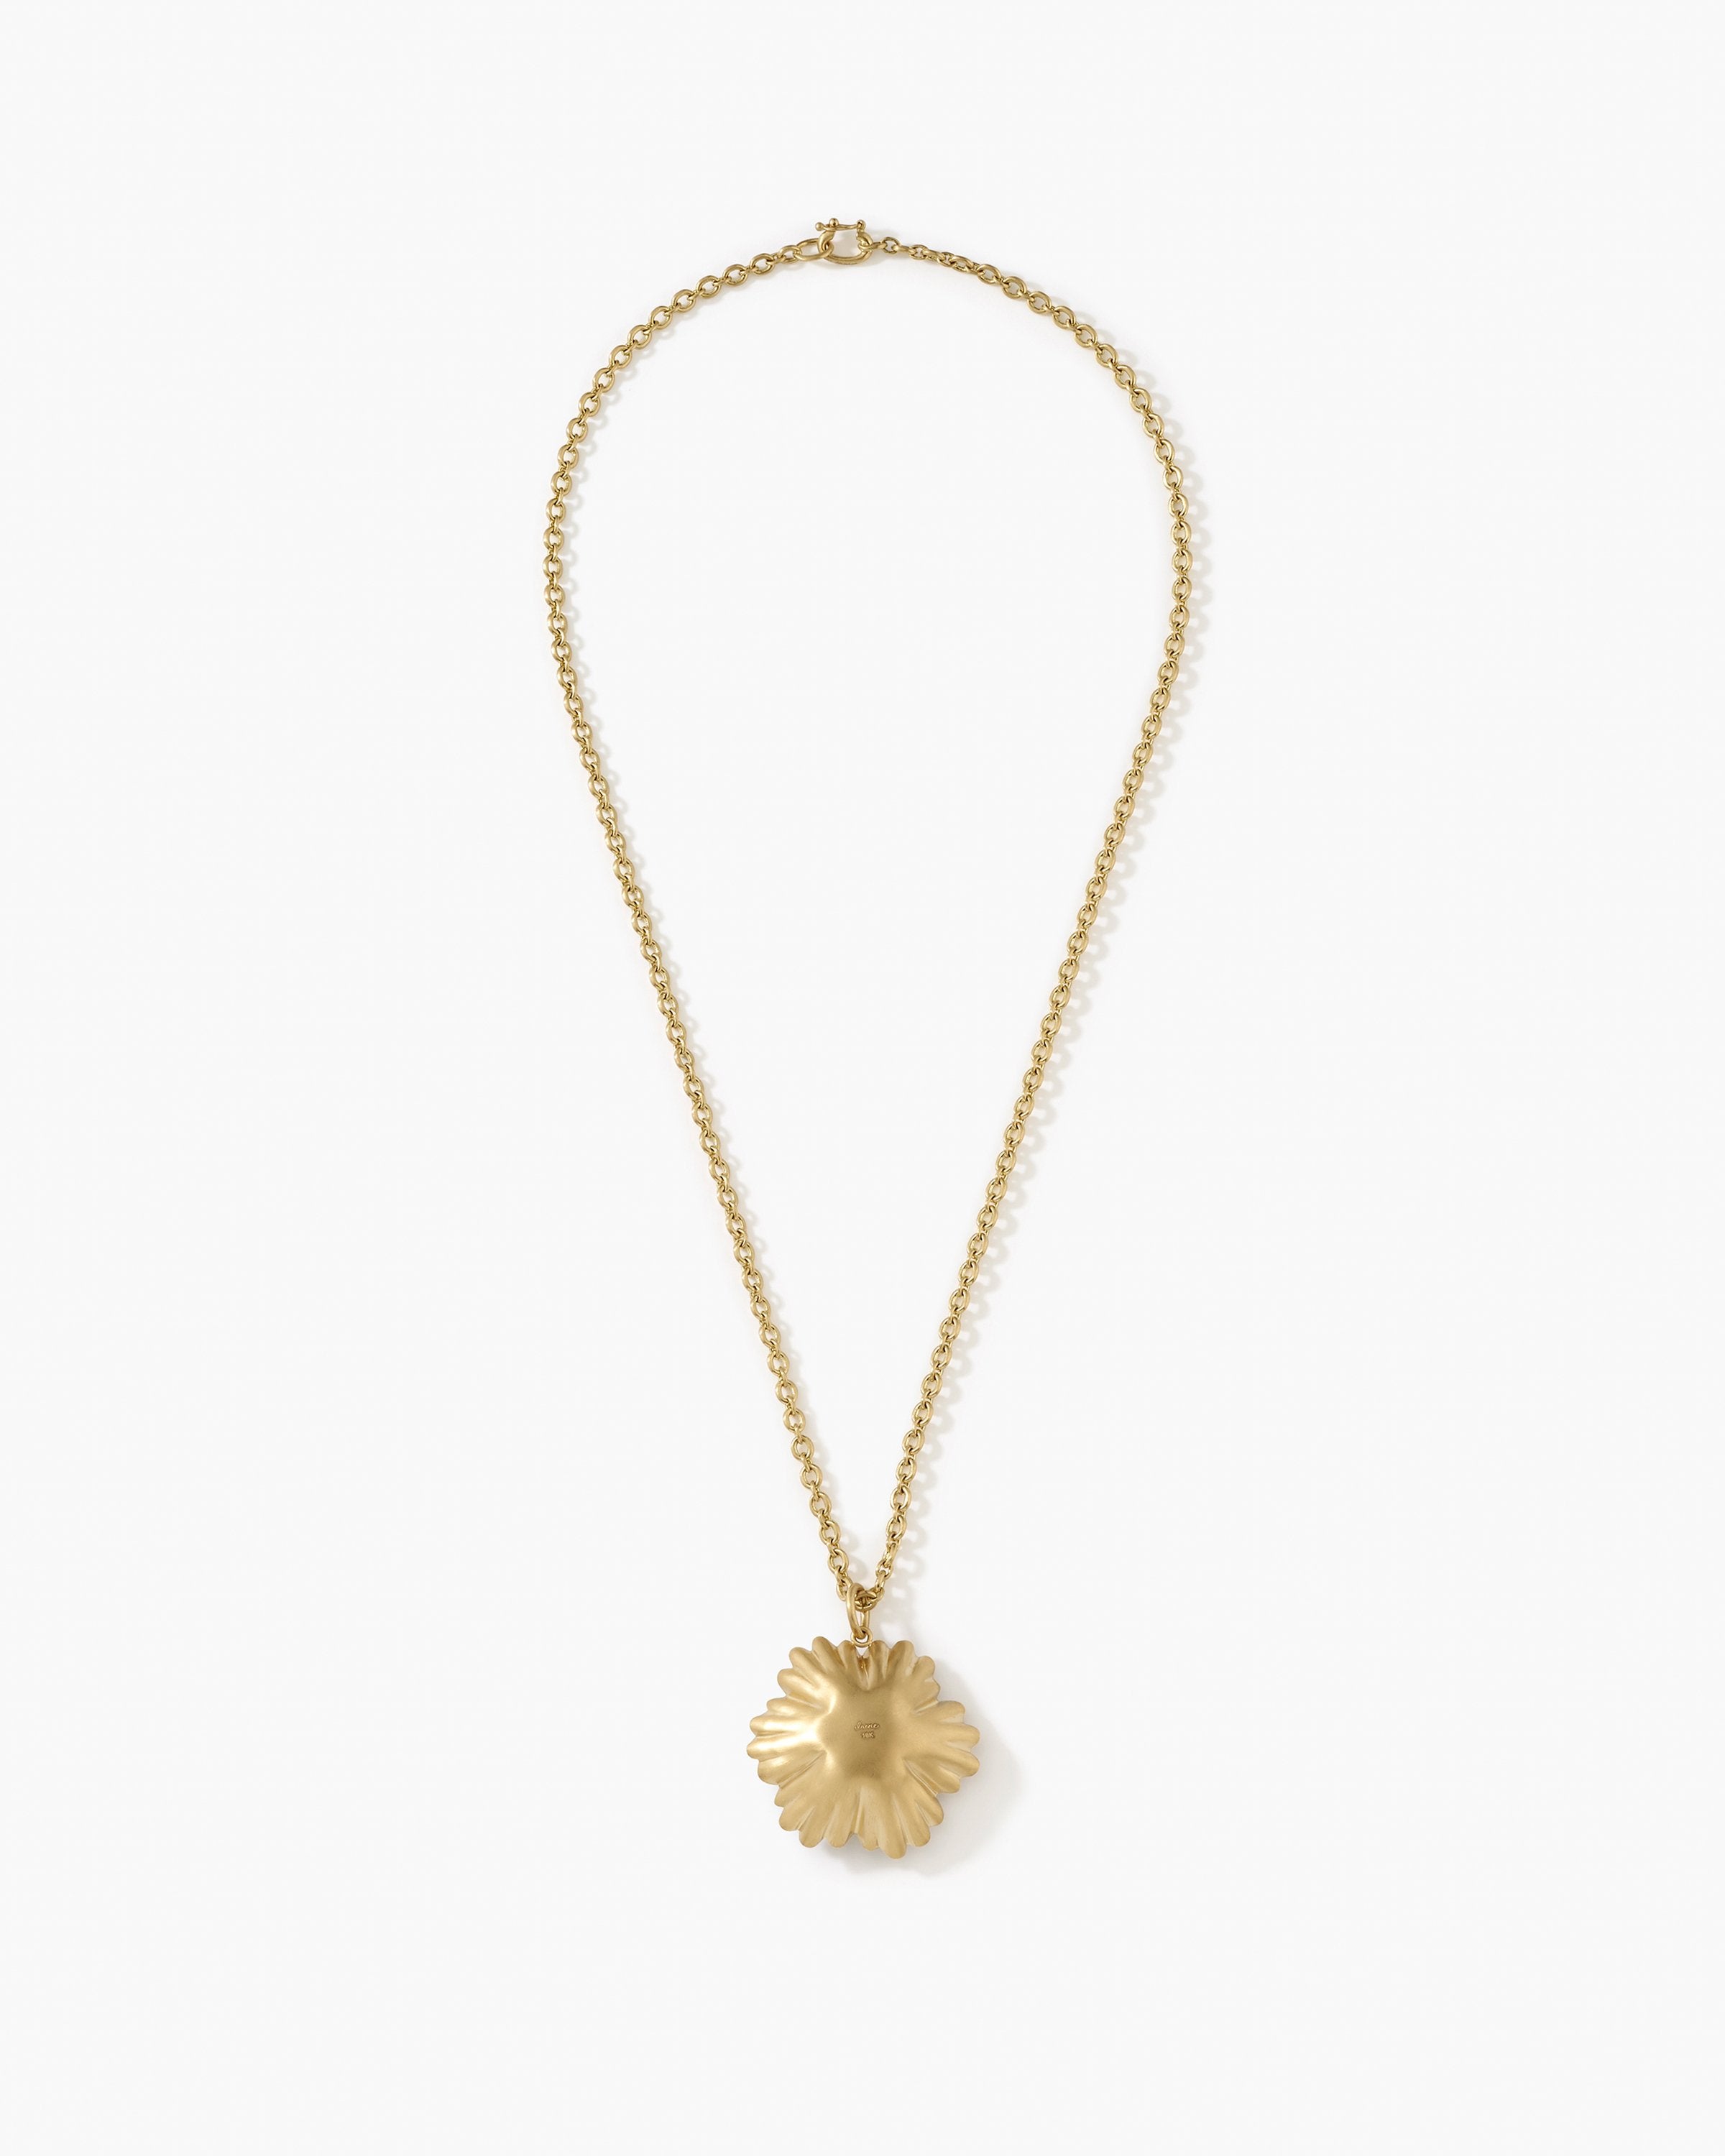 Buy Spring Bloom Diamond Pendant Online From Kisna